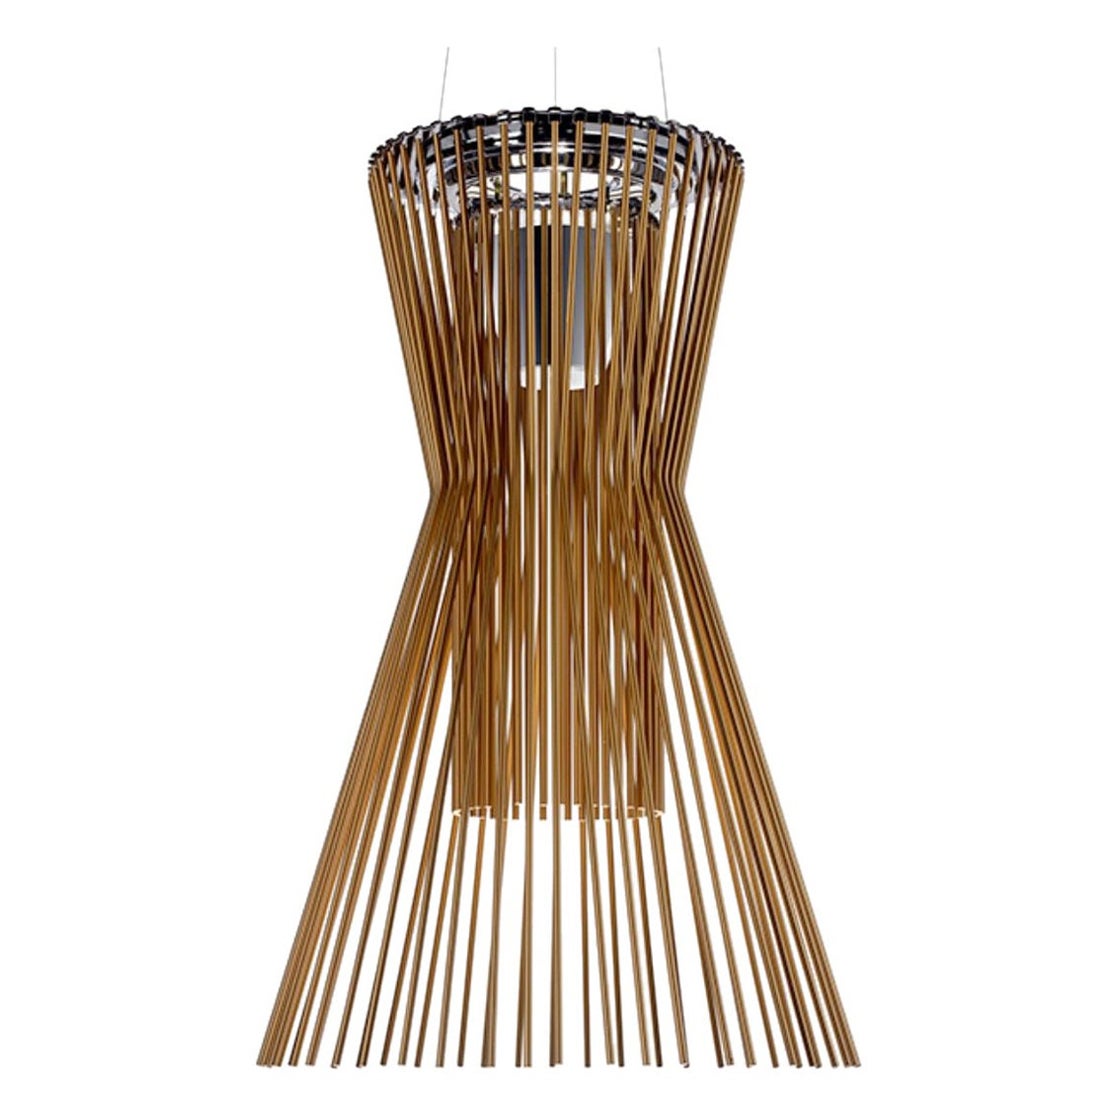 Atelier Oi ‘Allegro Vivace’ LED Chandelier Lamp in Copper for Foscarini